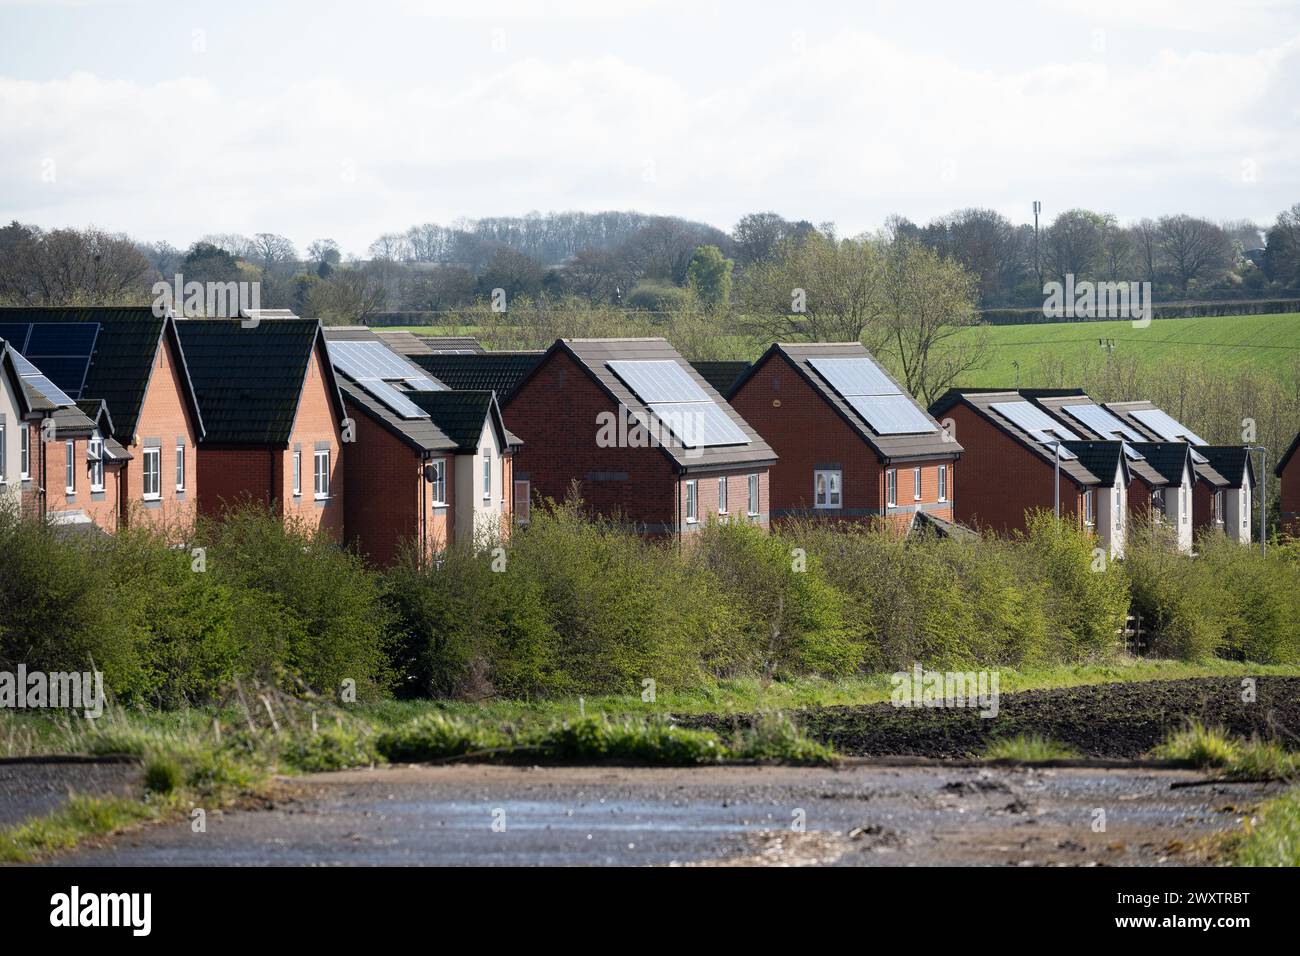 New housing with solar panels, Warwickshire, England, UK Stock Photo